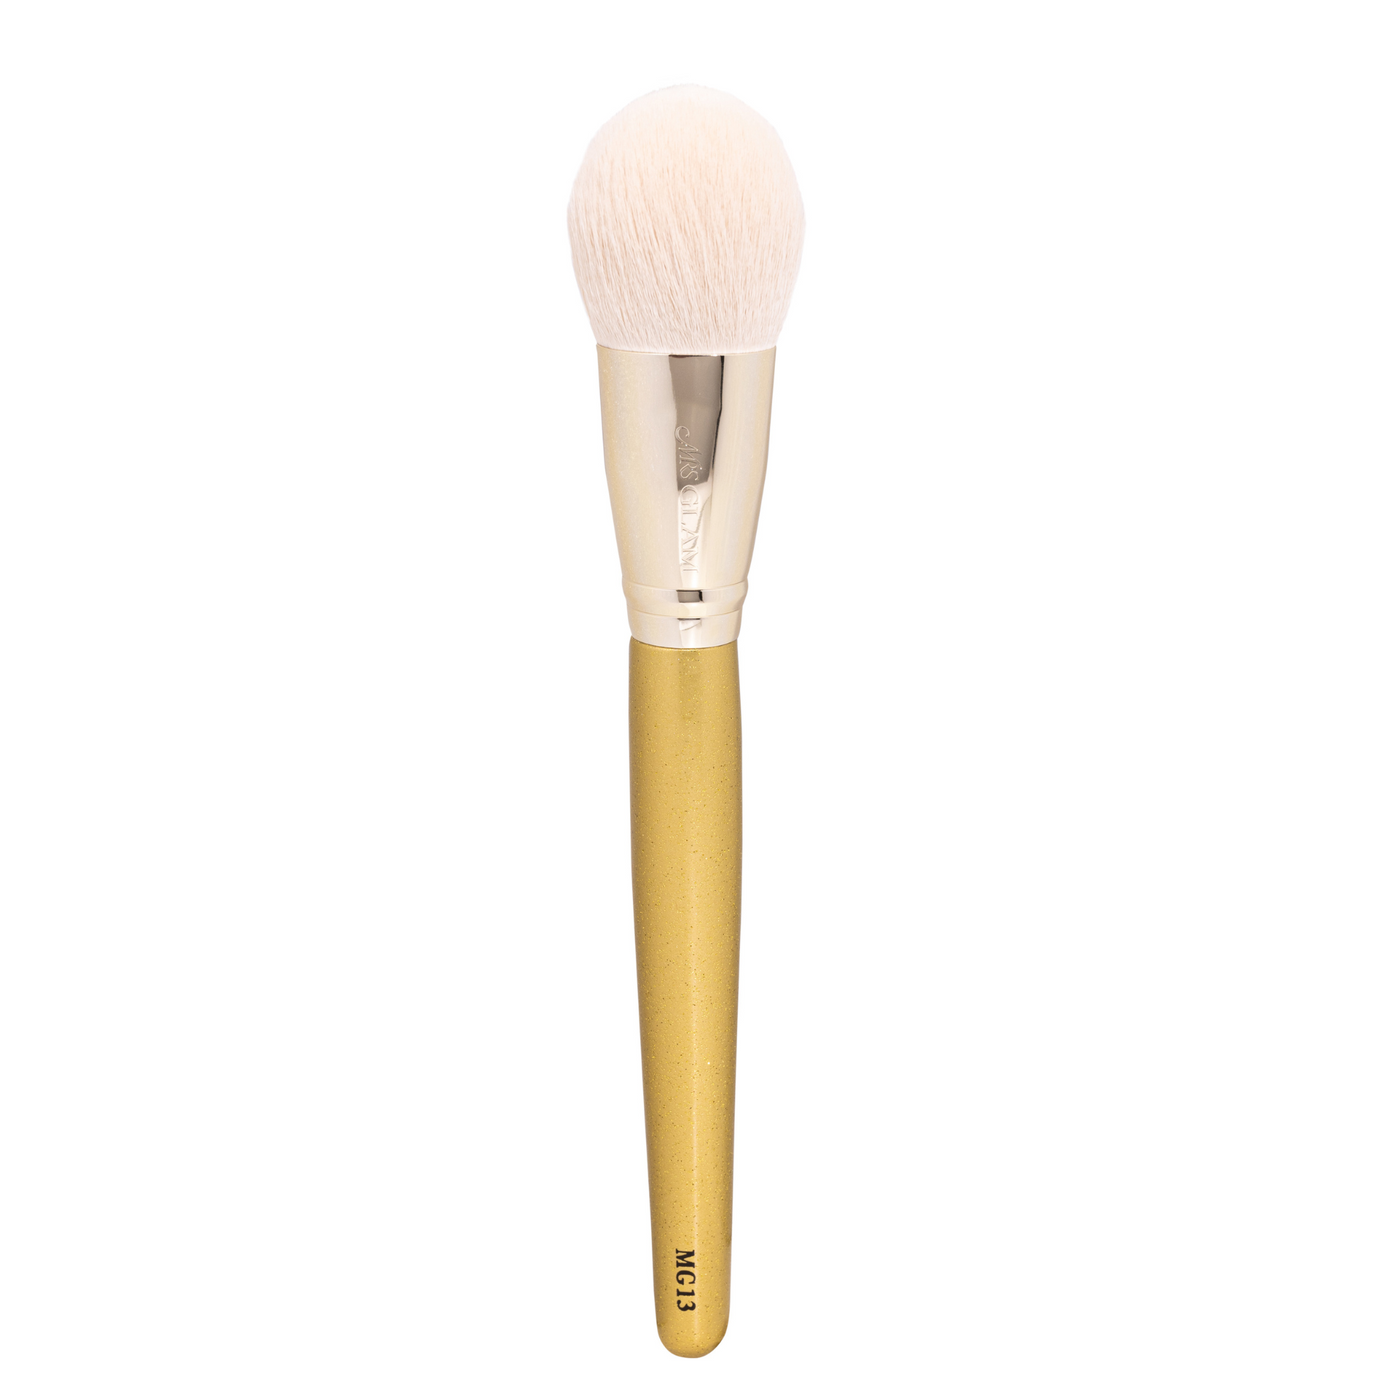 Mrs Glam - MG13 - Luxury Synthetic Tanning Brush